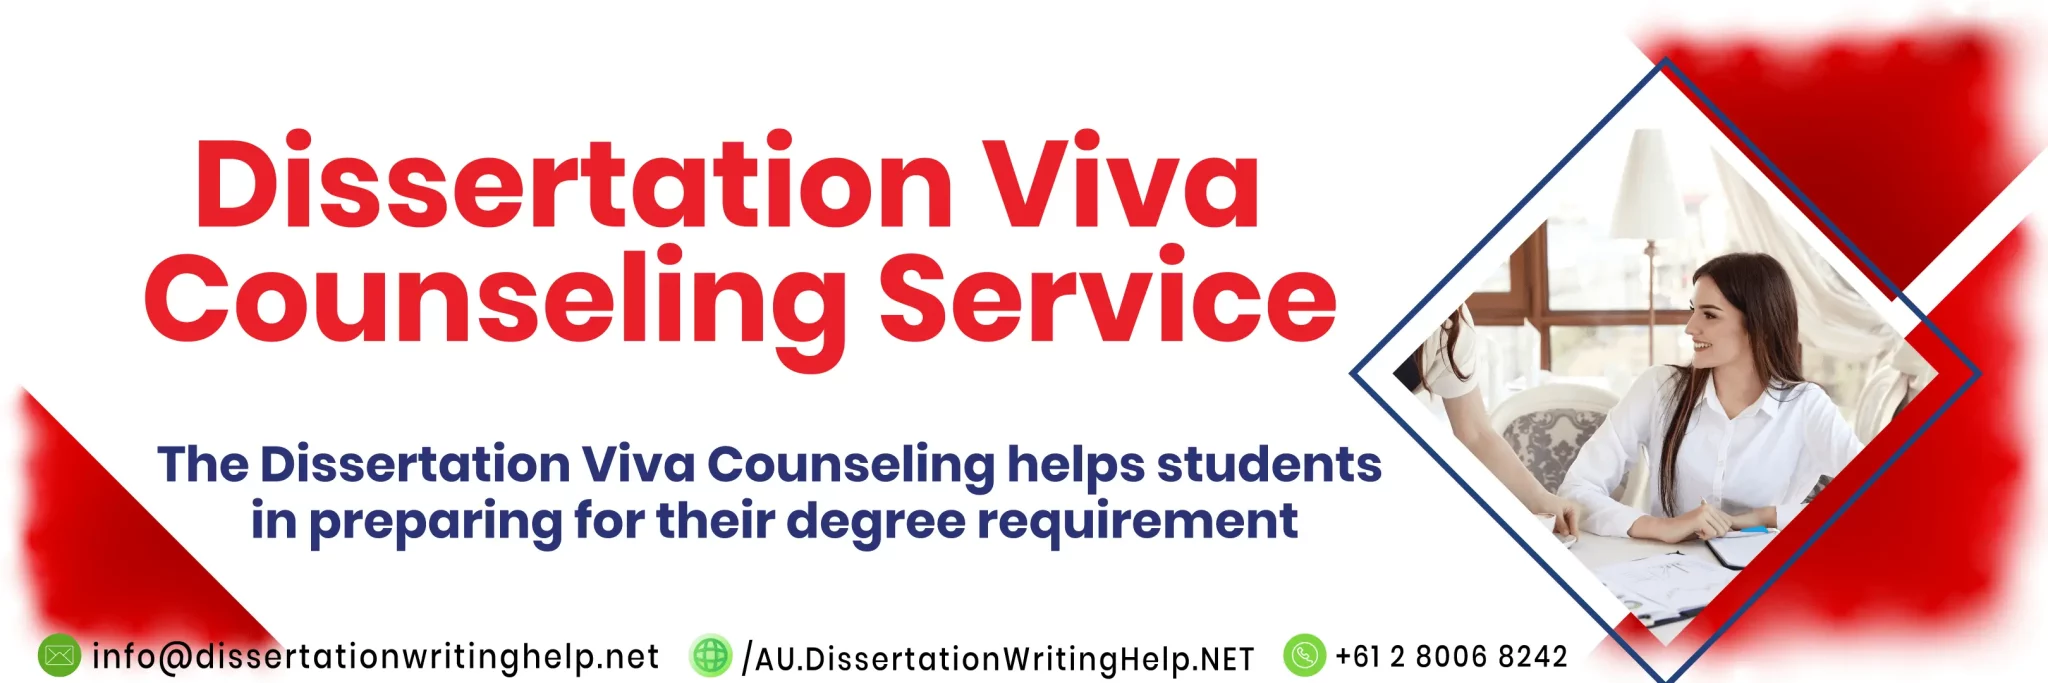 Dissertation Viva Counseling Service